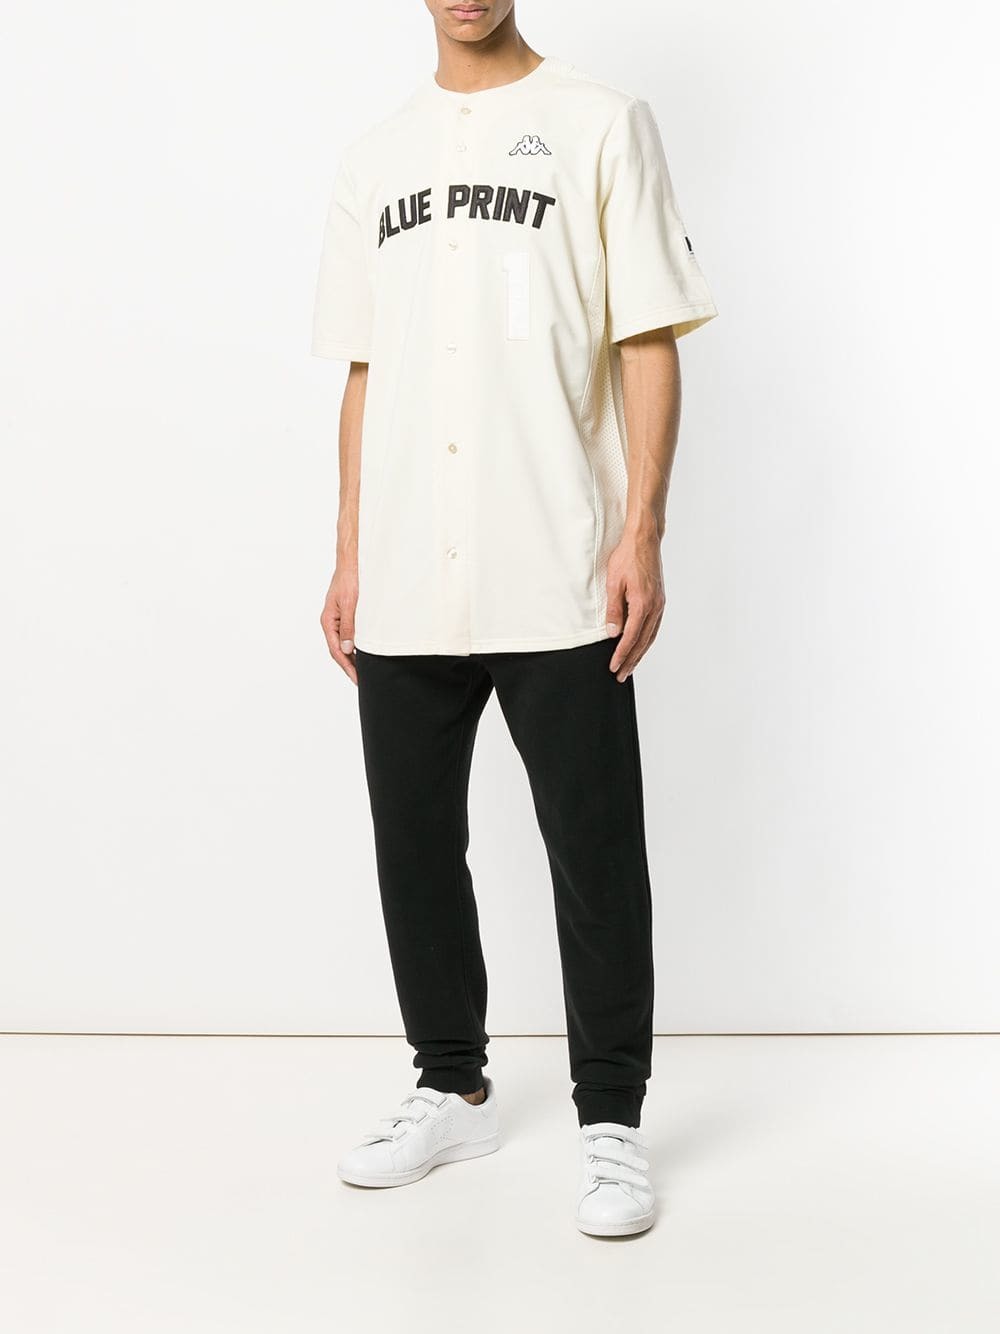 Capilla Mentor melón Kappa Kontroll Blueprint Baseball Shirt, $65 | farfetch.com | Lookastic